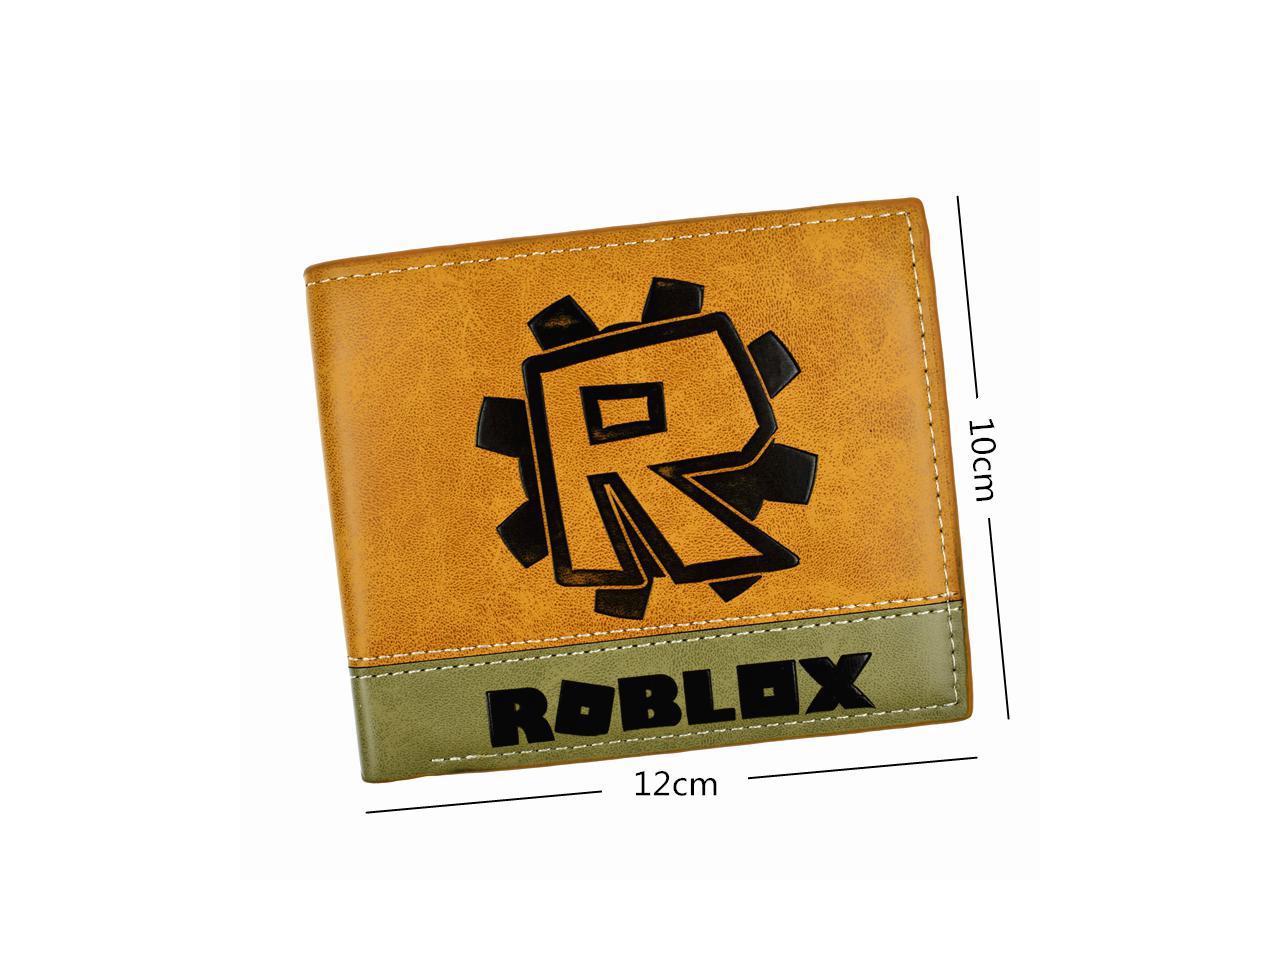 Kbteoacssyshhm - money bag tool roblox